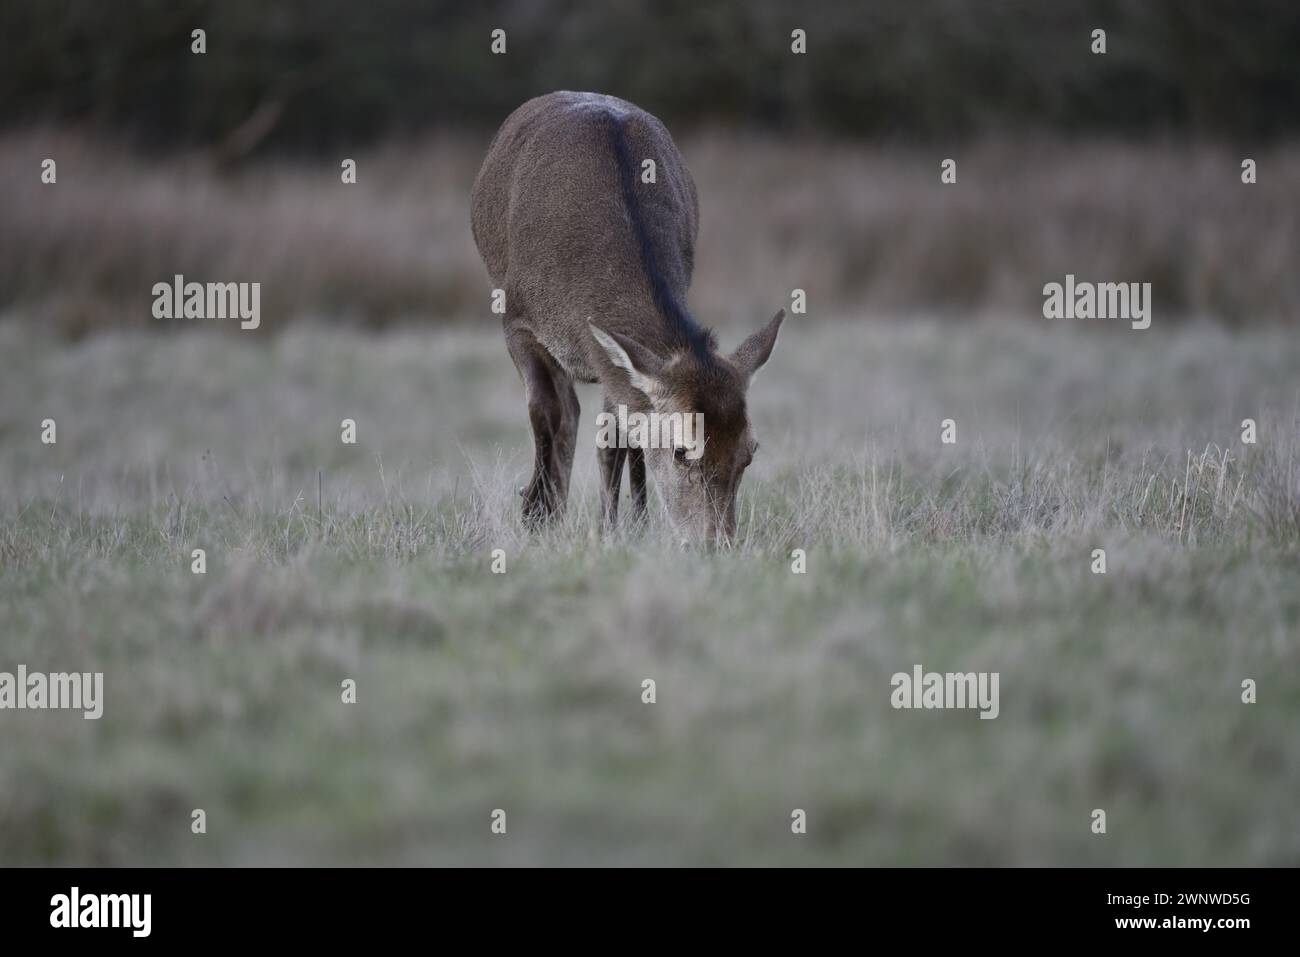 Red Deer Doe (Cervus elaphus) Grazing, Facing Camera, Middle of Image, taken in February in the UK Stock Photo